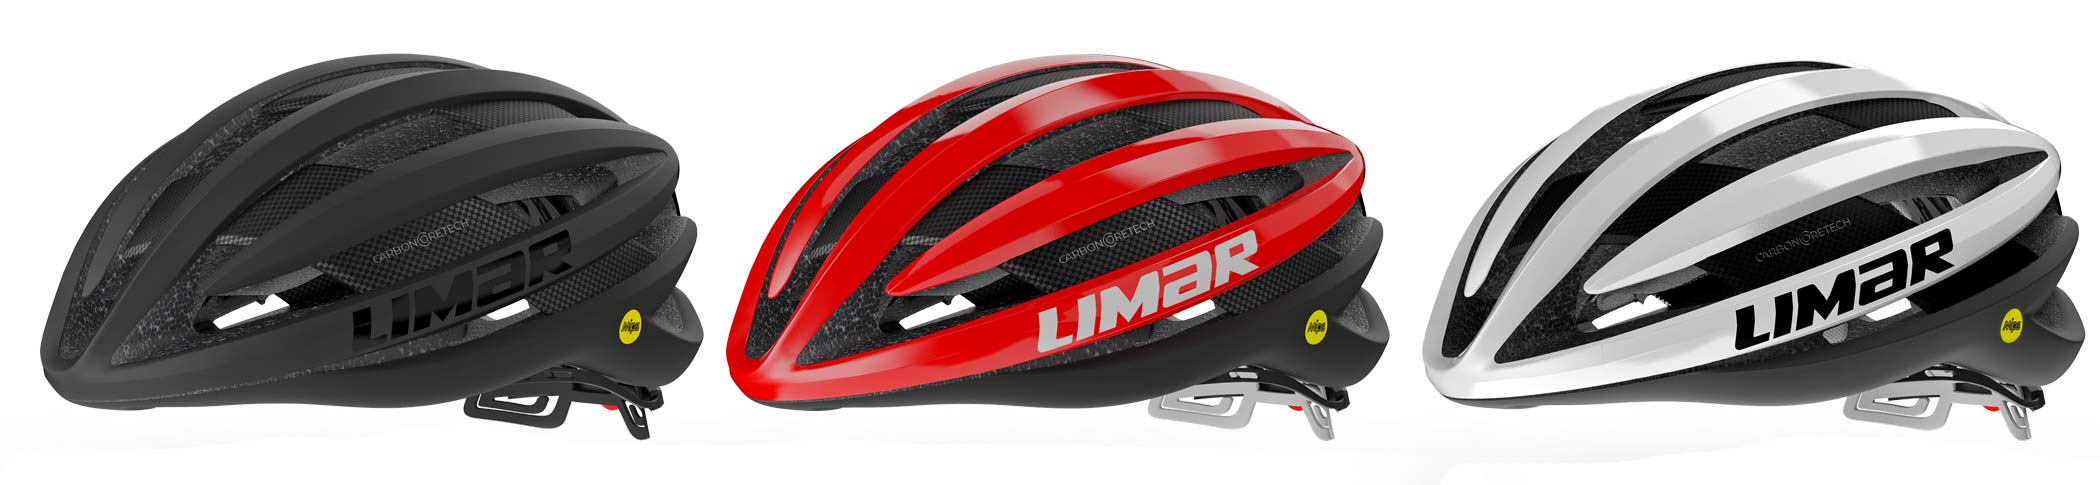 Limar Air Pro MIPS Ai road helmet, next gen MIPS impact protection in fully vented aero road bike helmet, black red or white